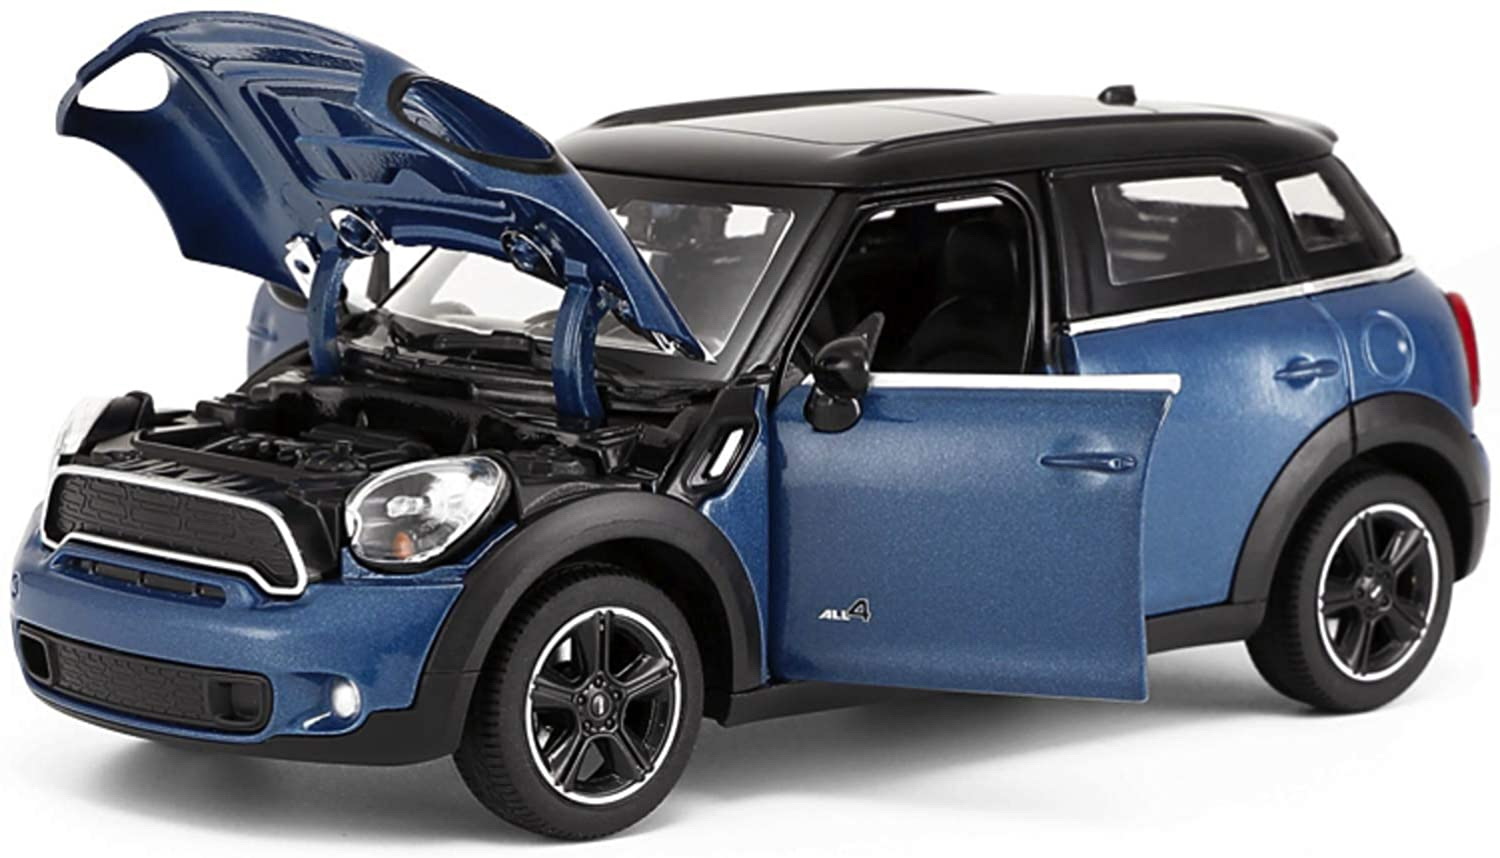 Masina metalica - Mini Cooper, Albastru | Rastar